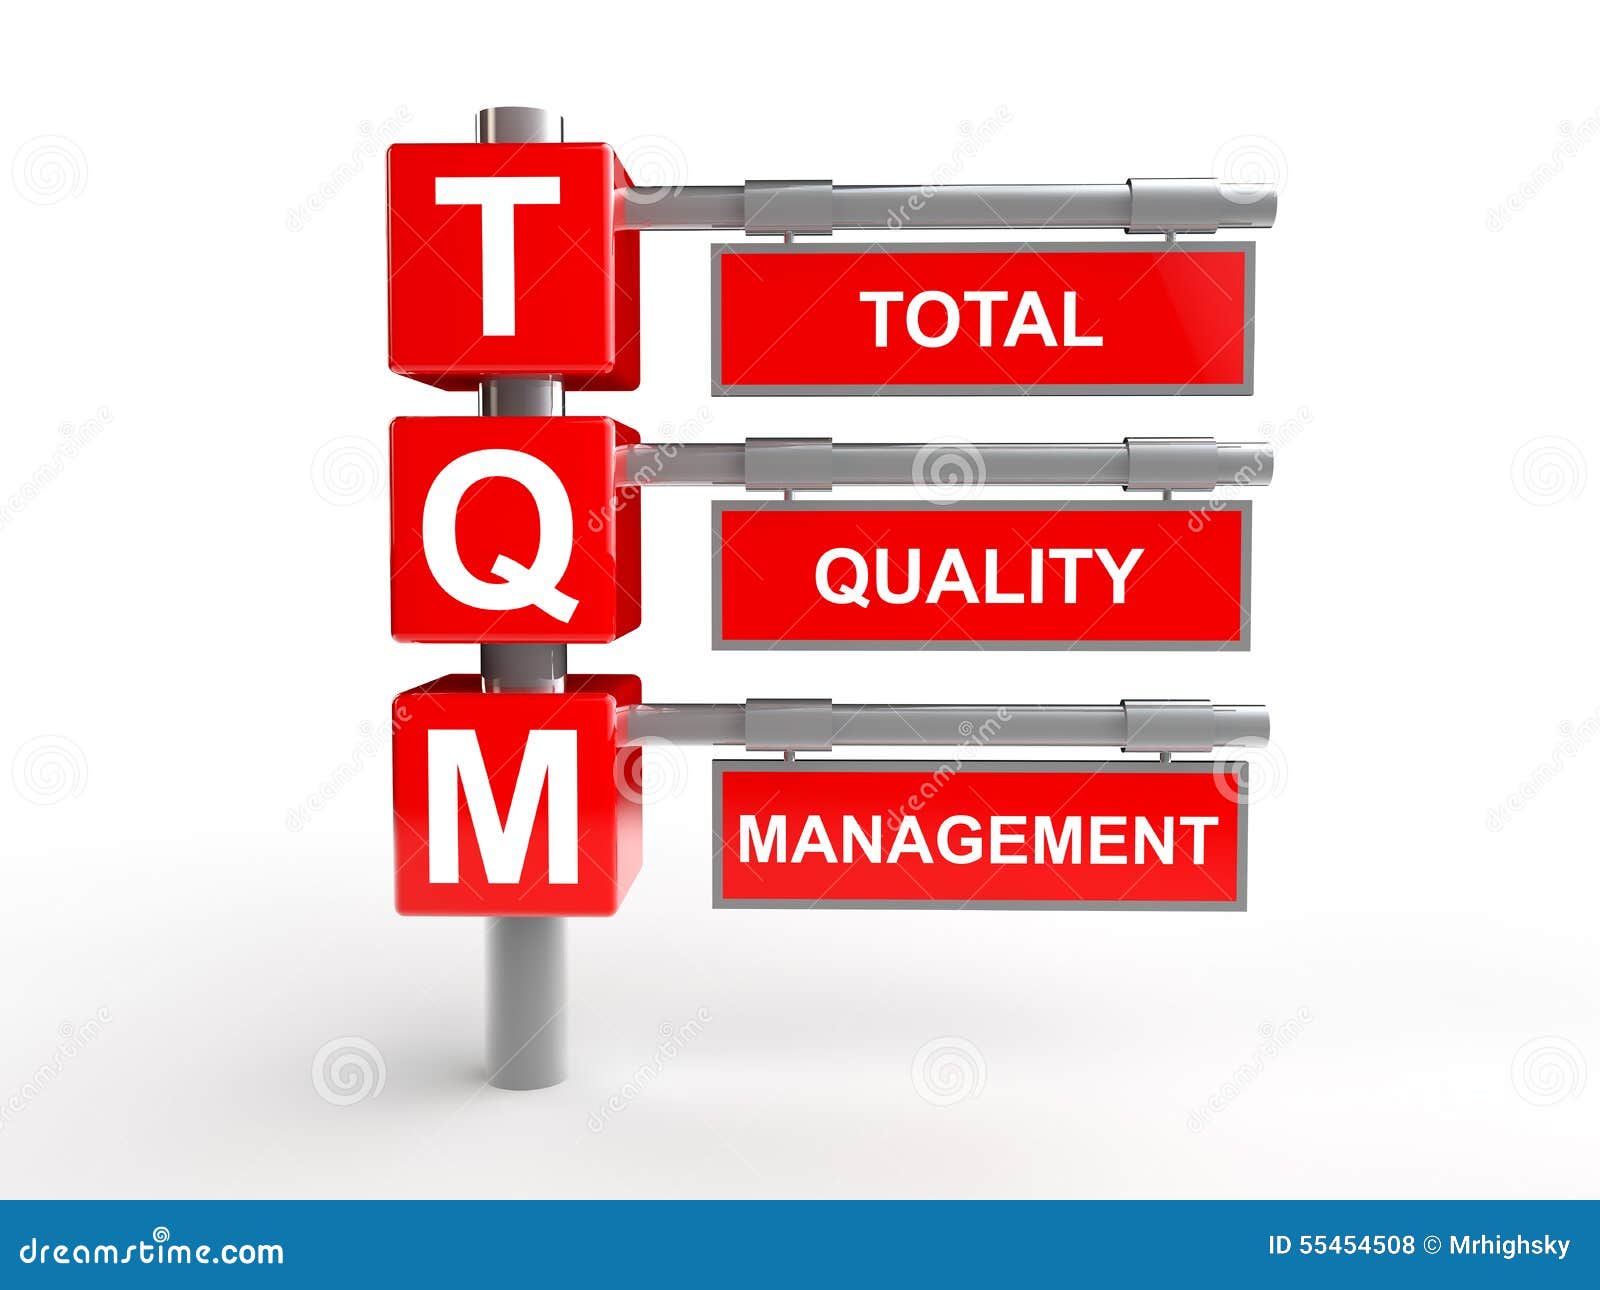 Total quality. Total quality Management. TQM total quality Management. Всеобщее управление качеством (total quality Management). Total quality Management на русском.